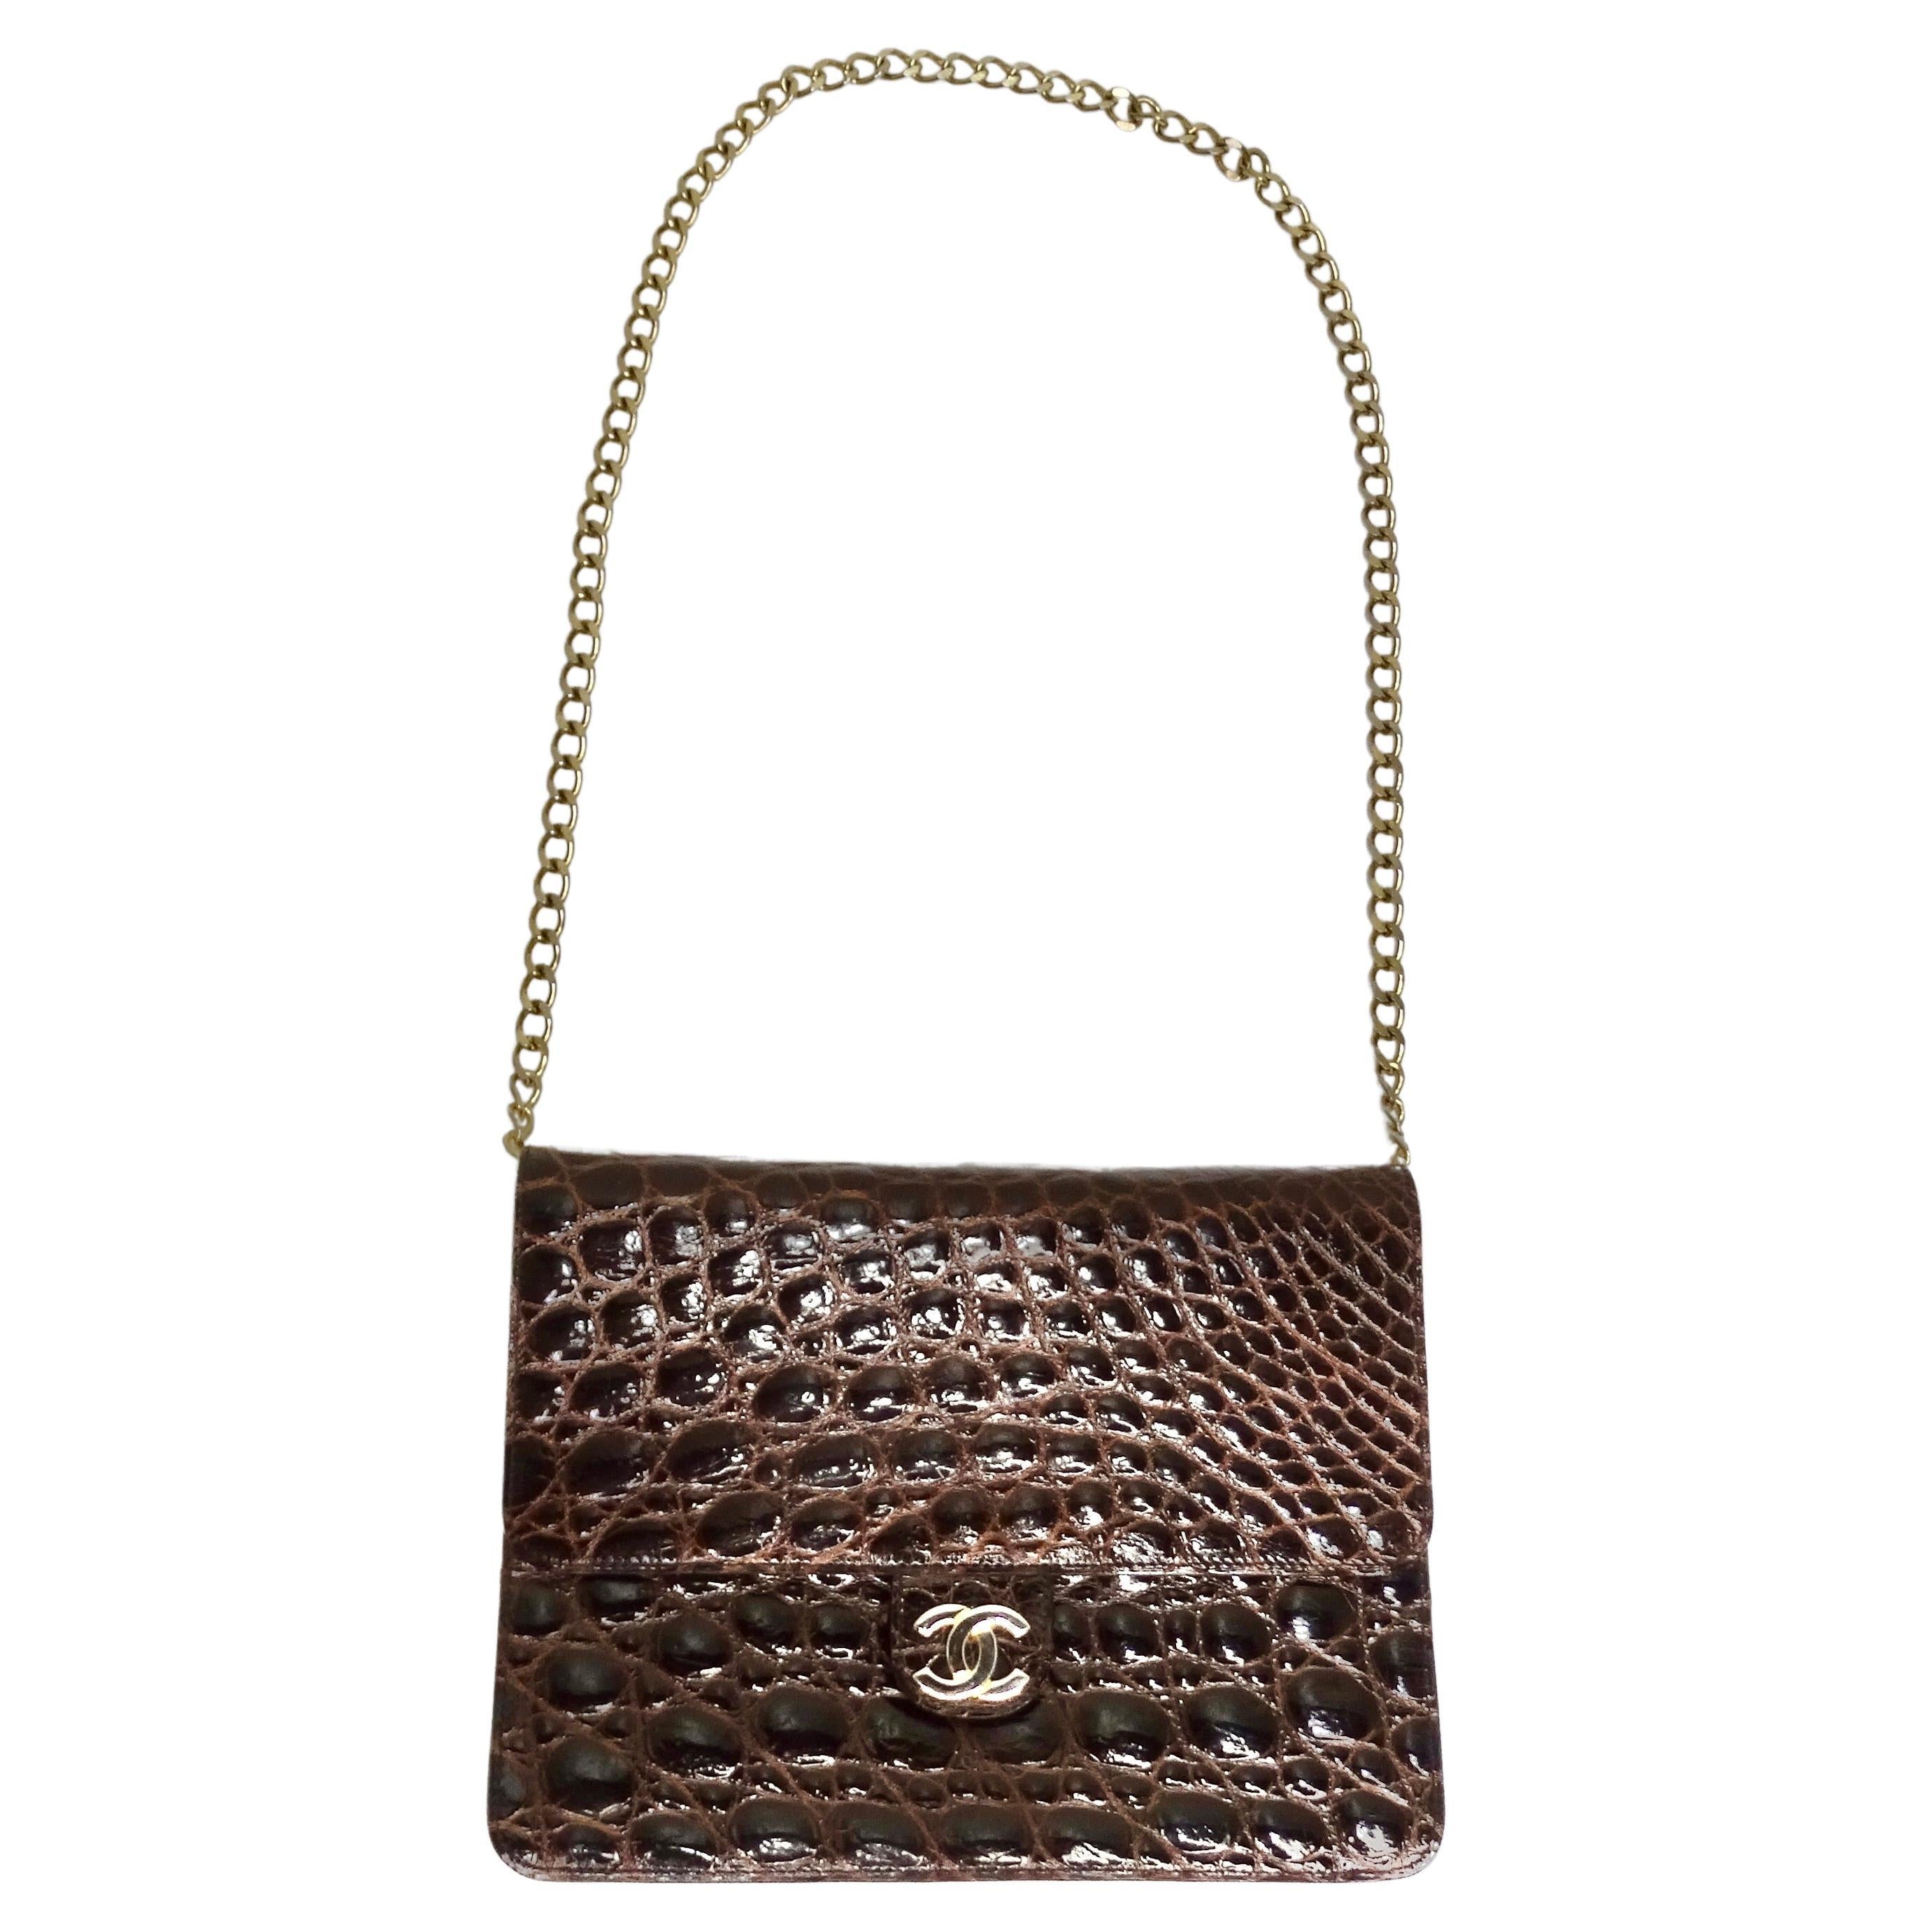 Chanel 1980s Crocodile Handbag